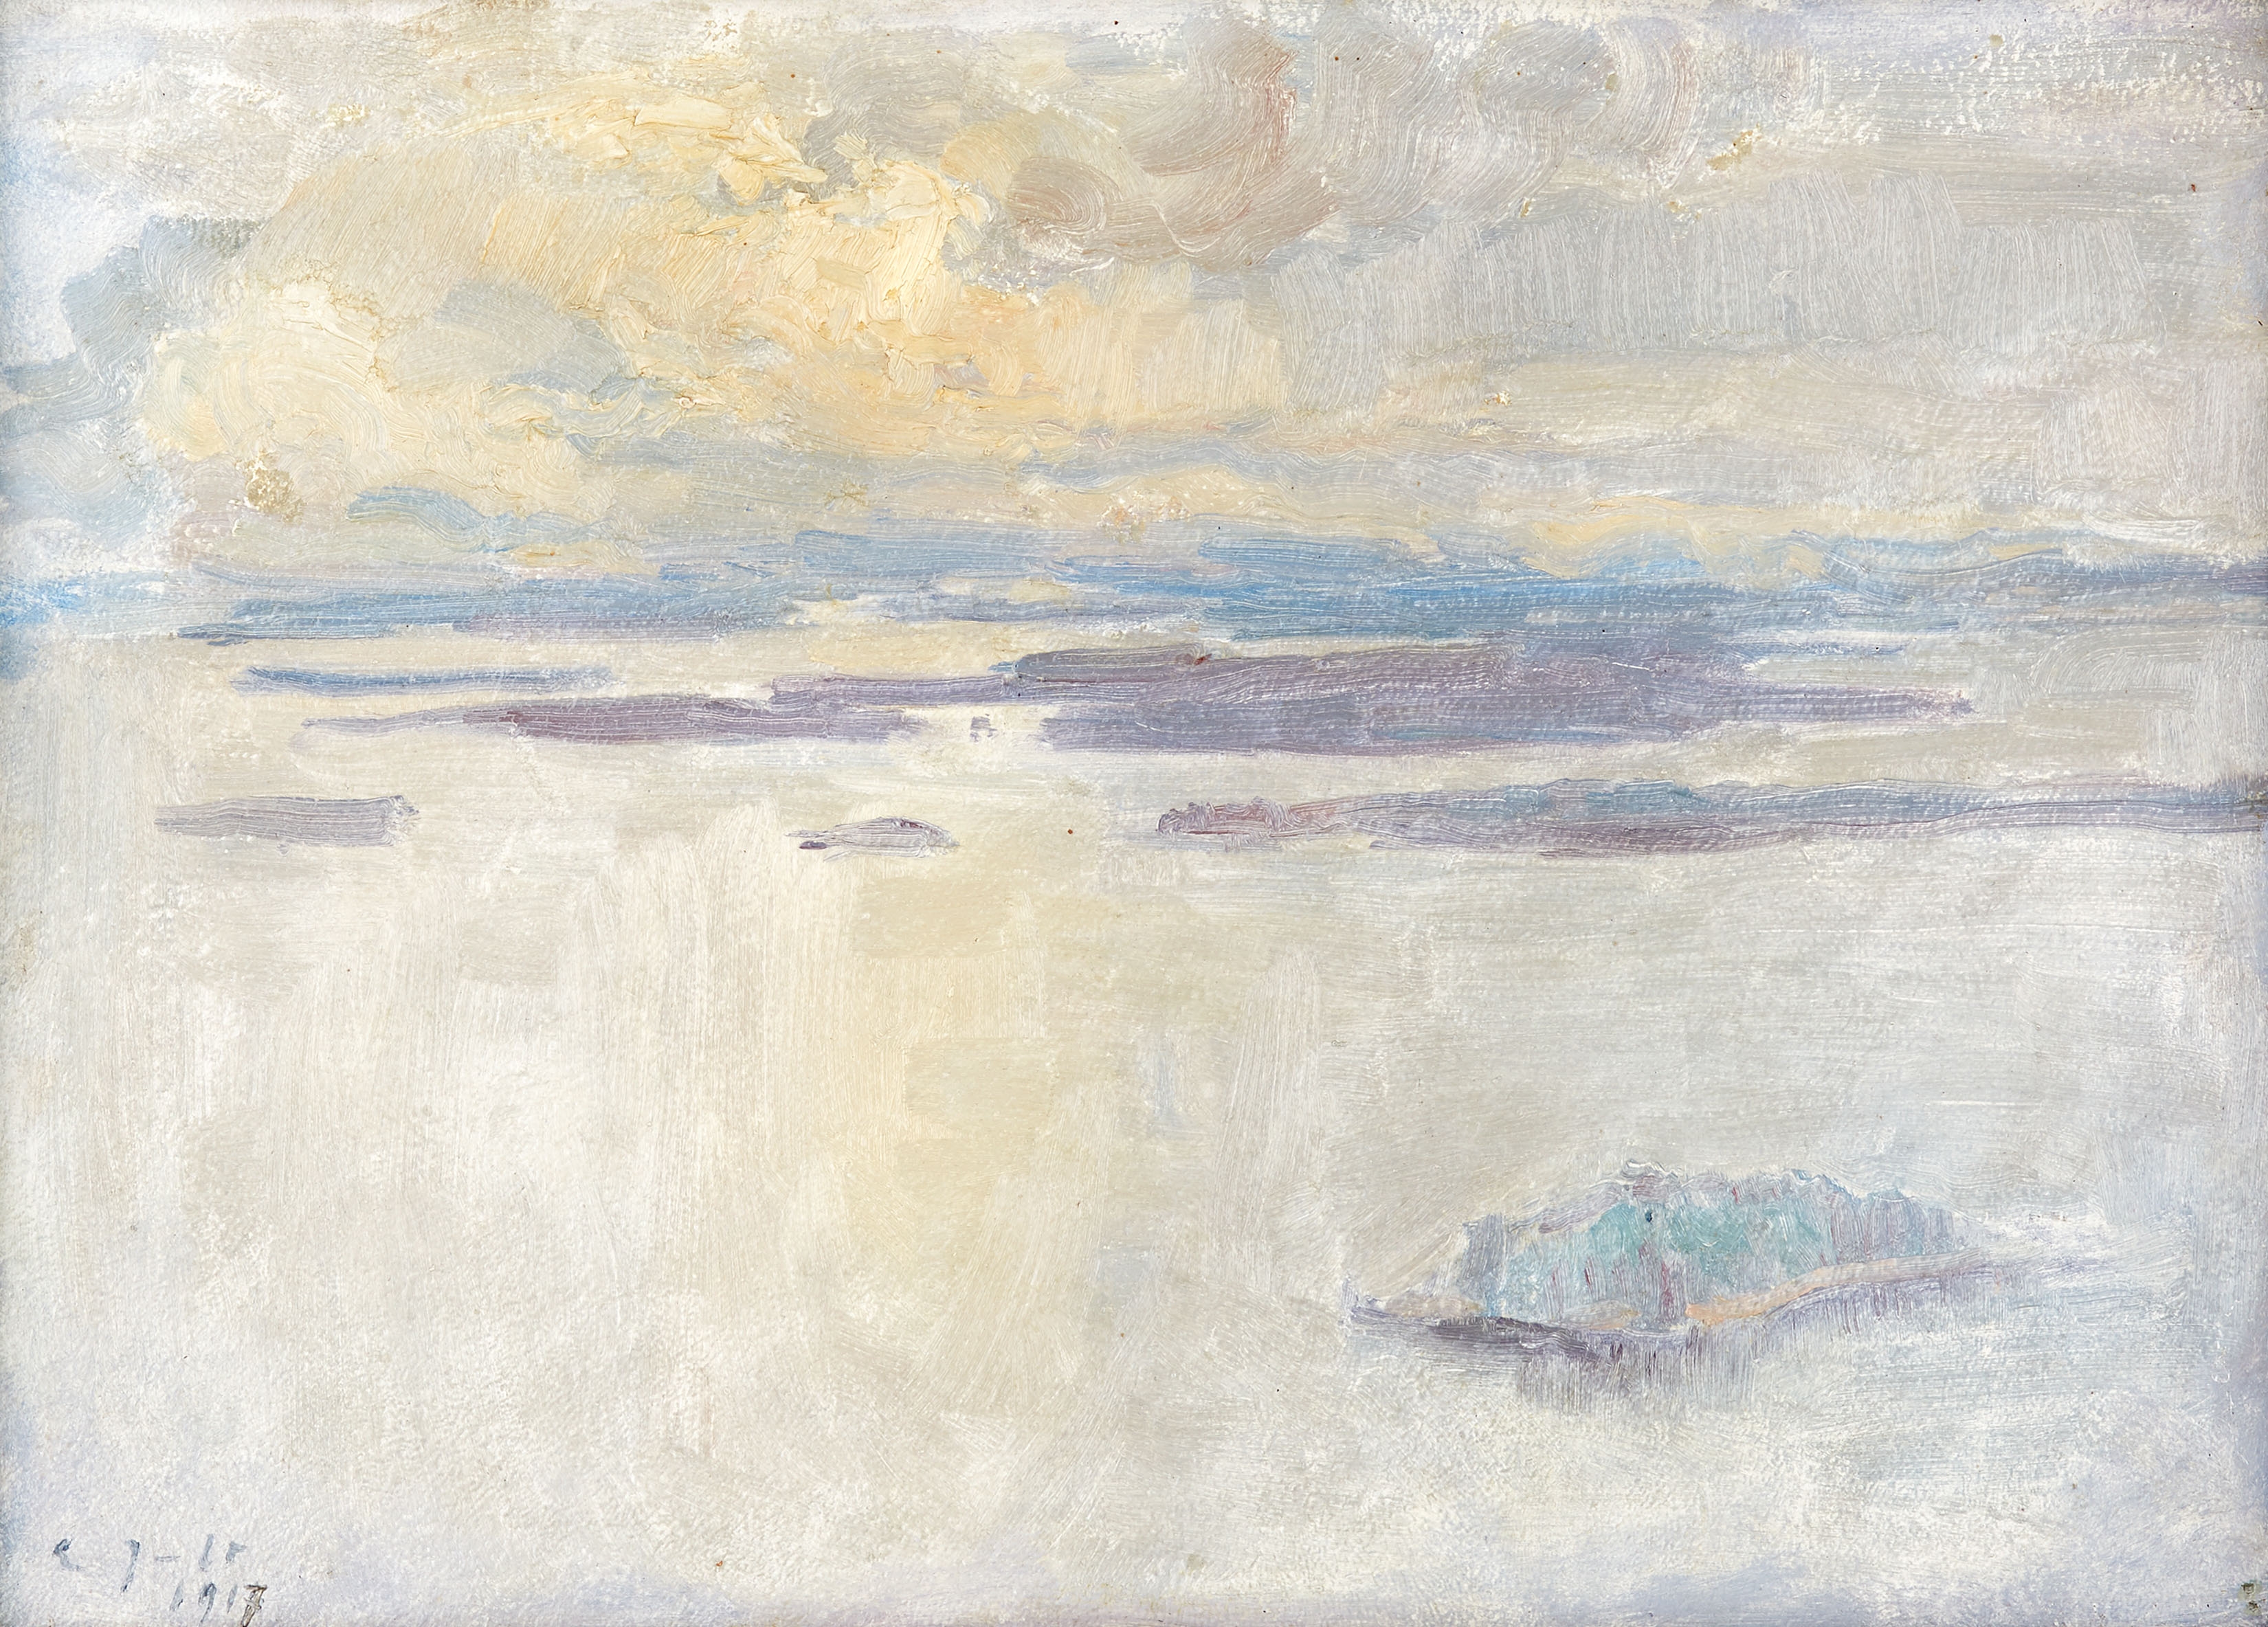 Utsikt över sjön Saimen by Eero Järnefelt, 1917